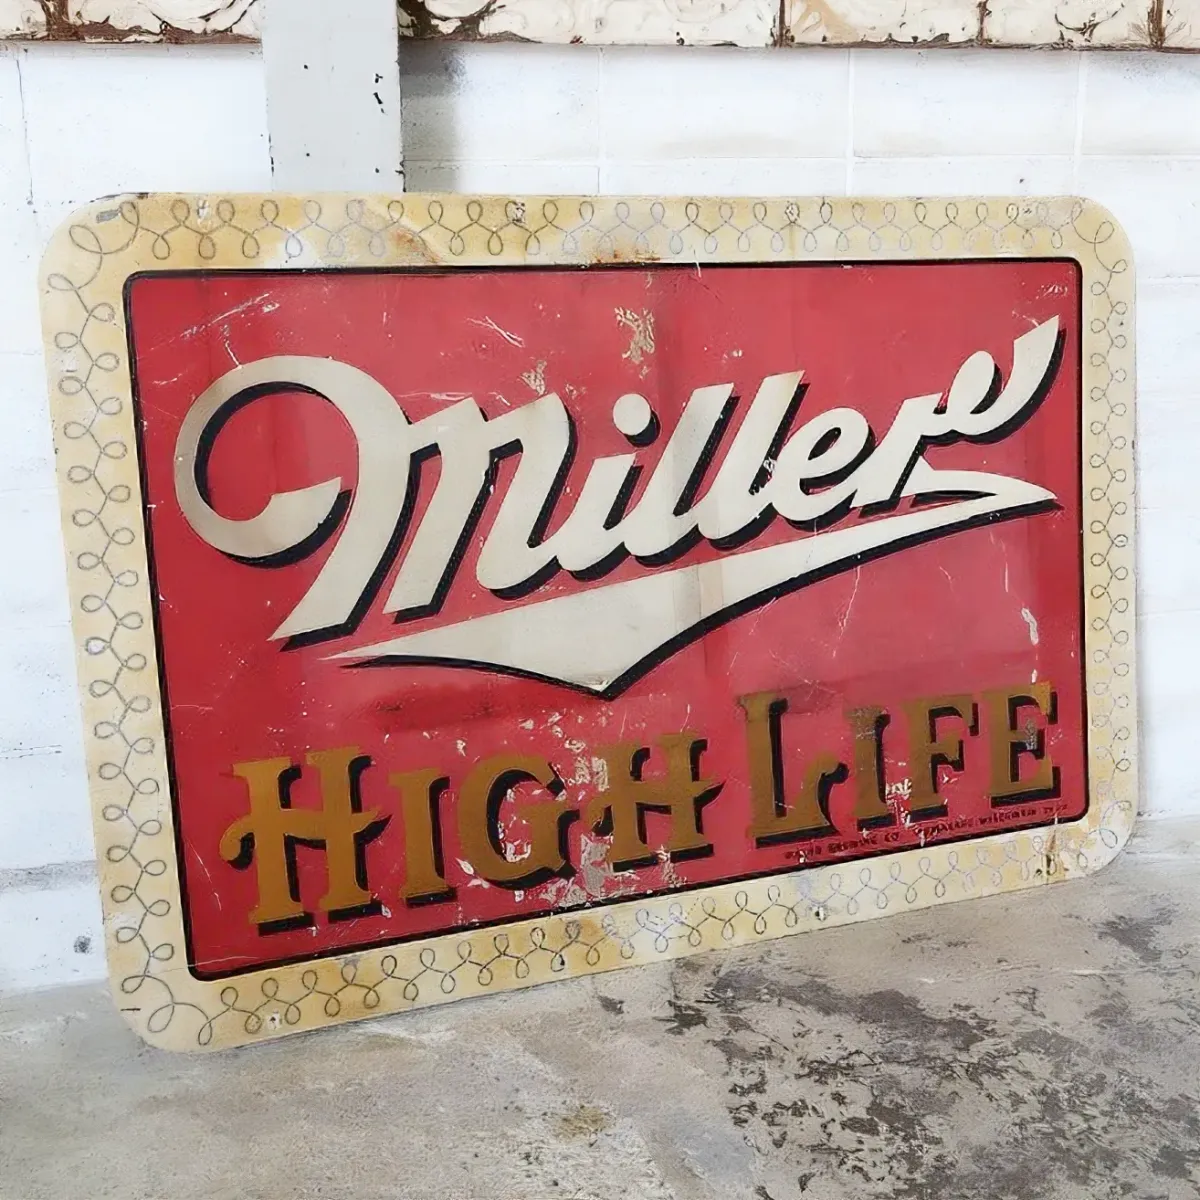 50's〜Miller HIGH LIFE ビンテージ 大型メタル看板 両面